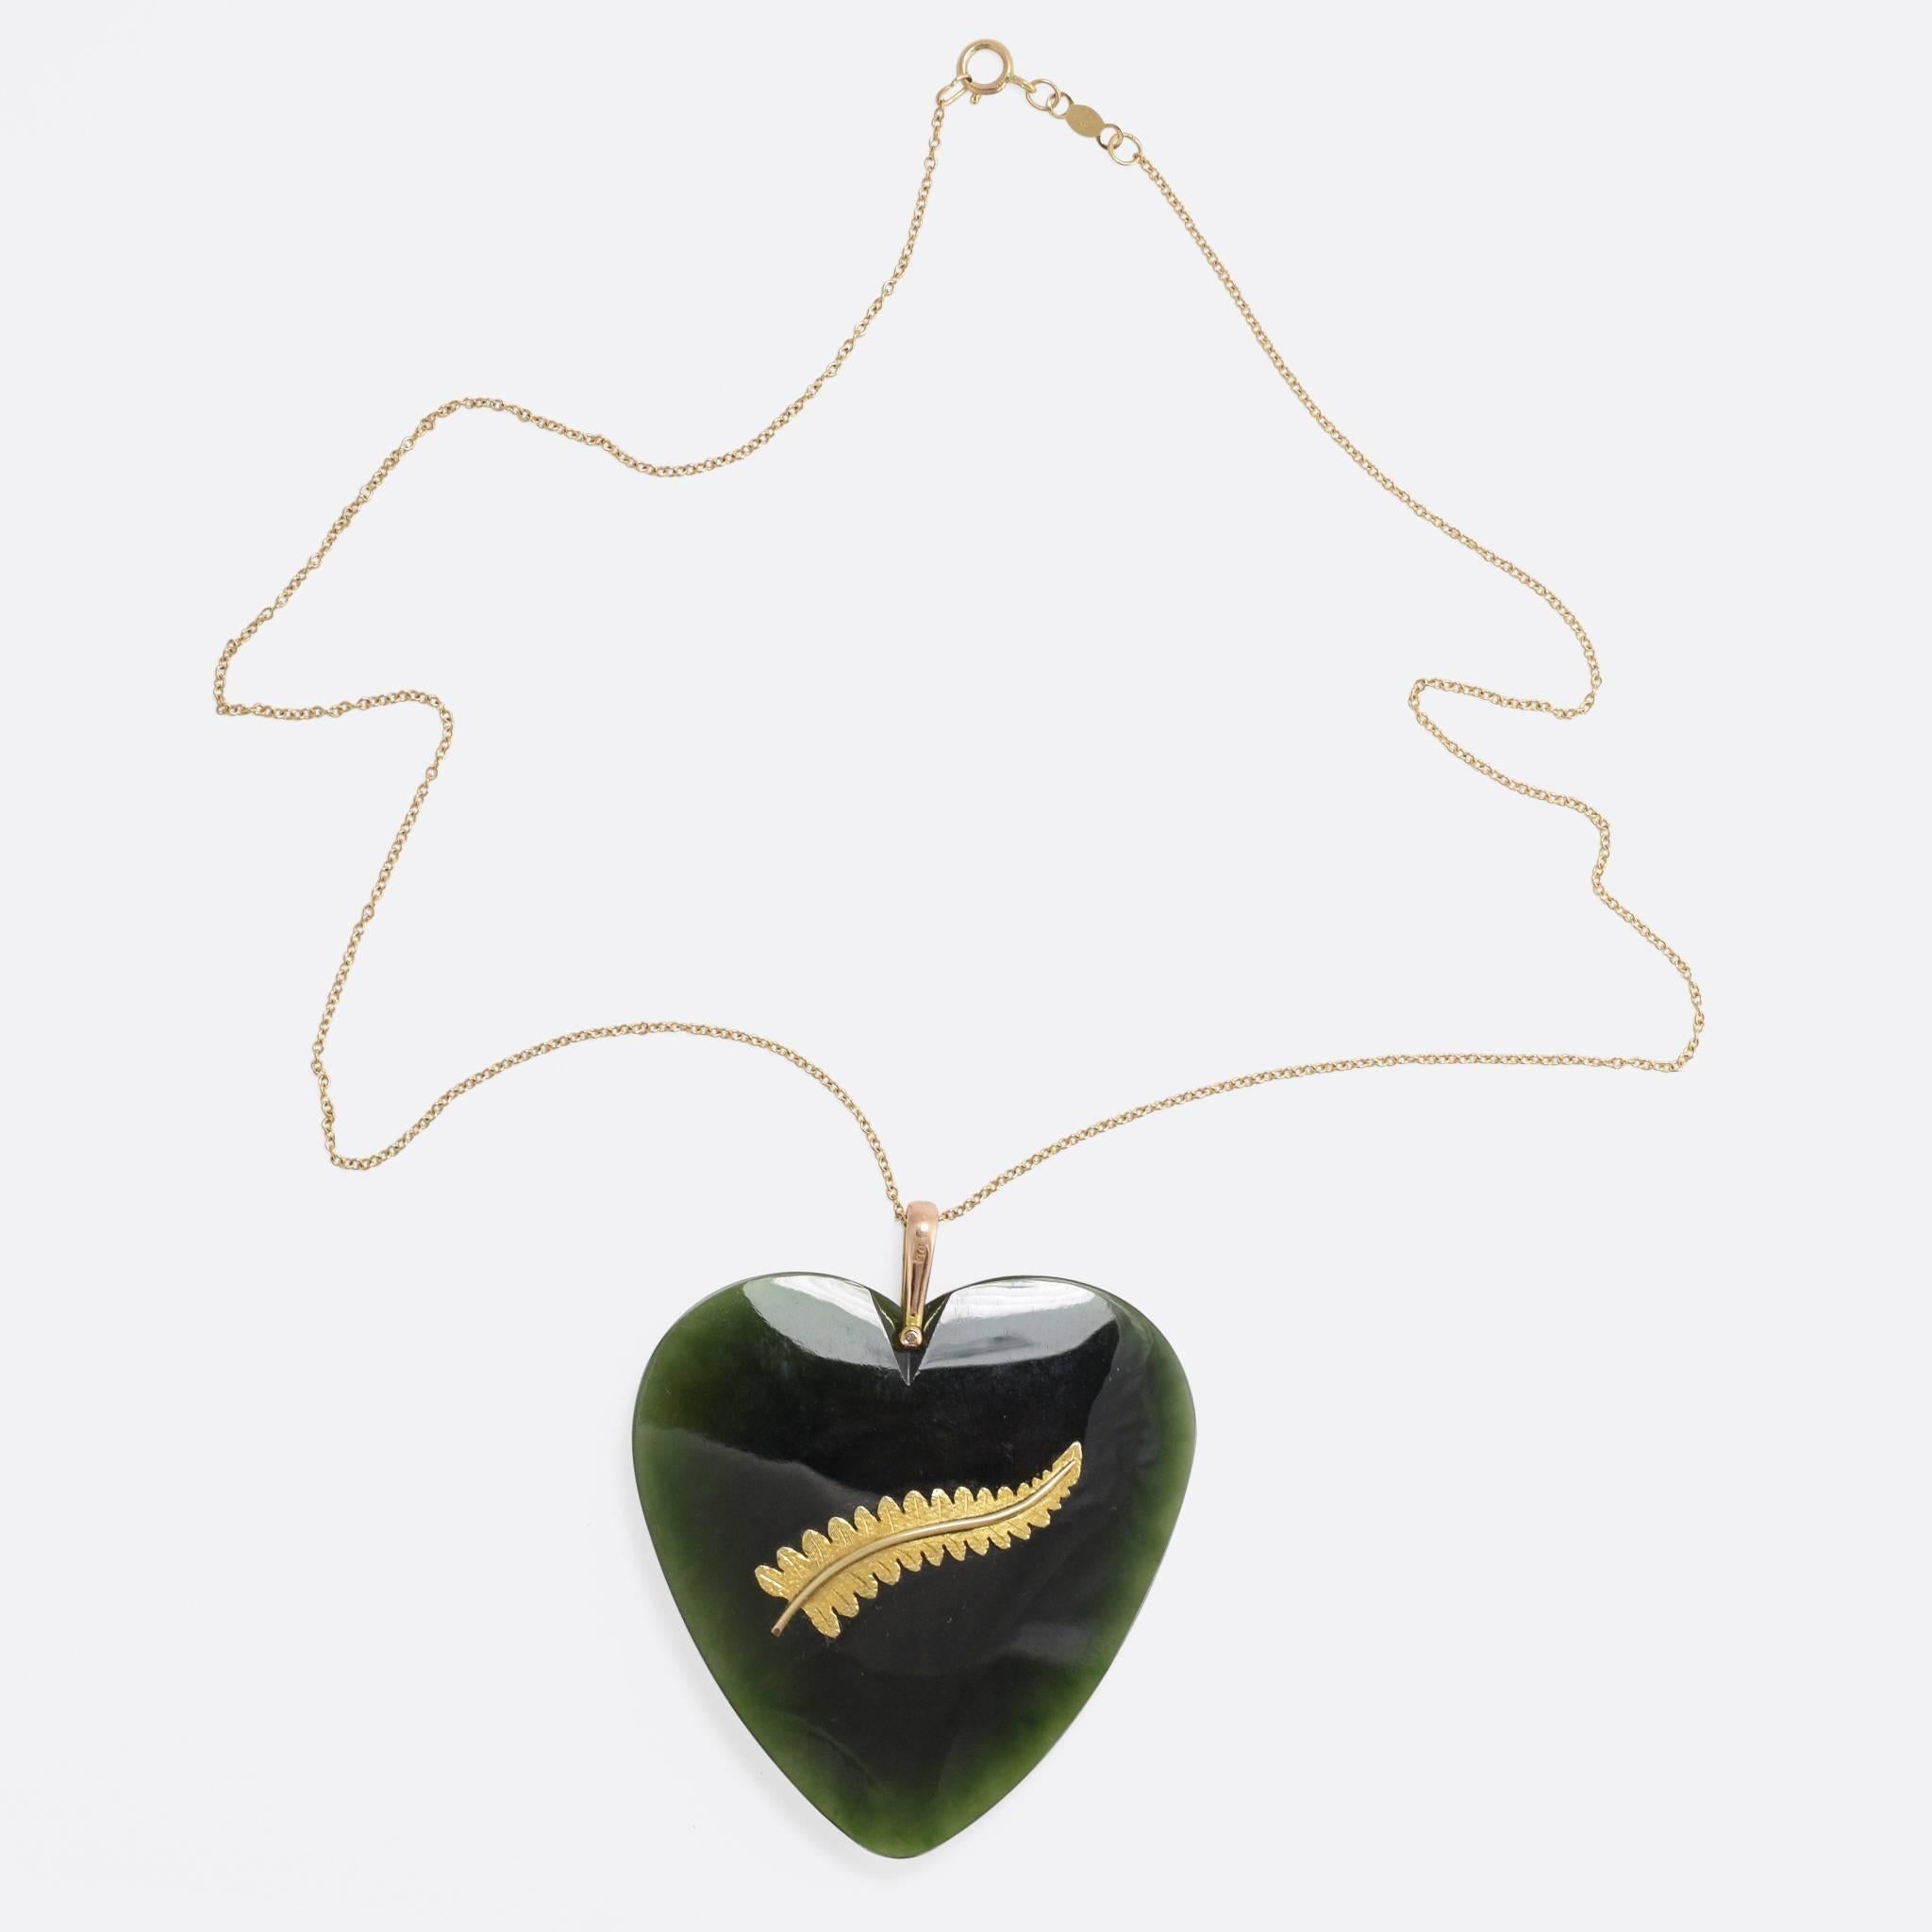 greenstone heart necklace